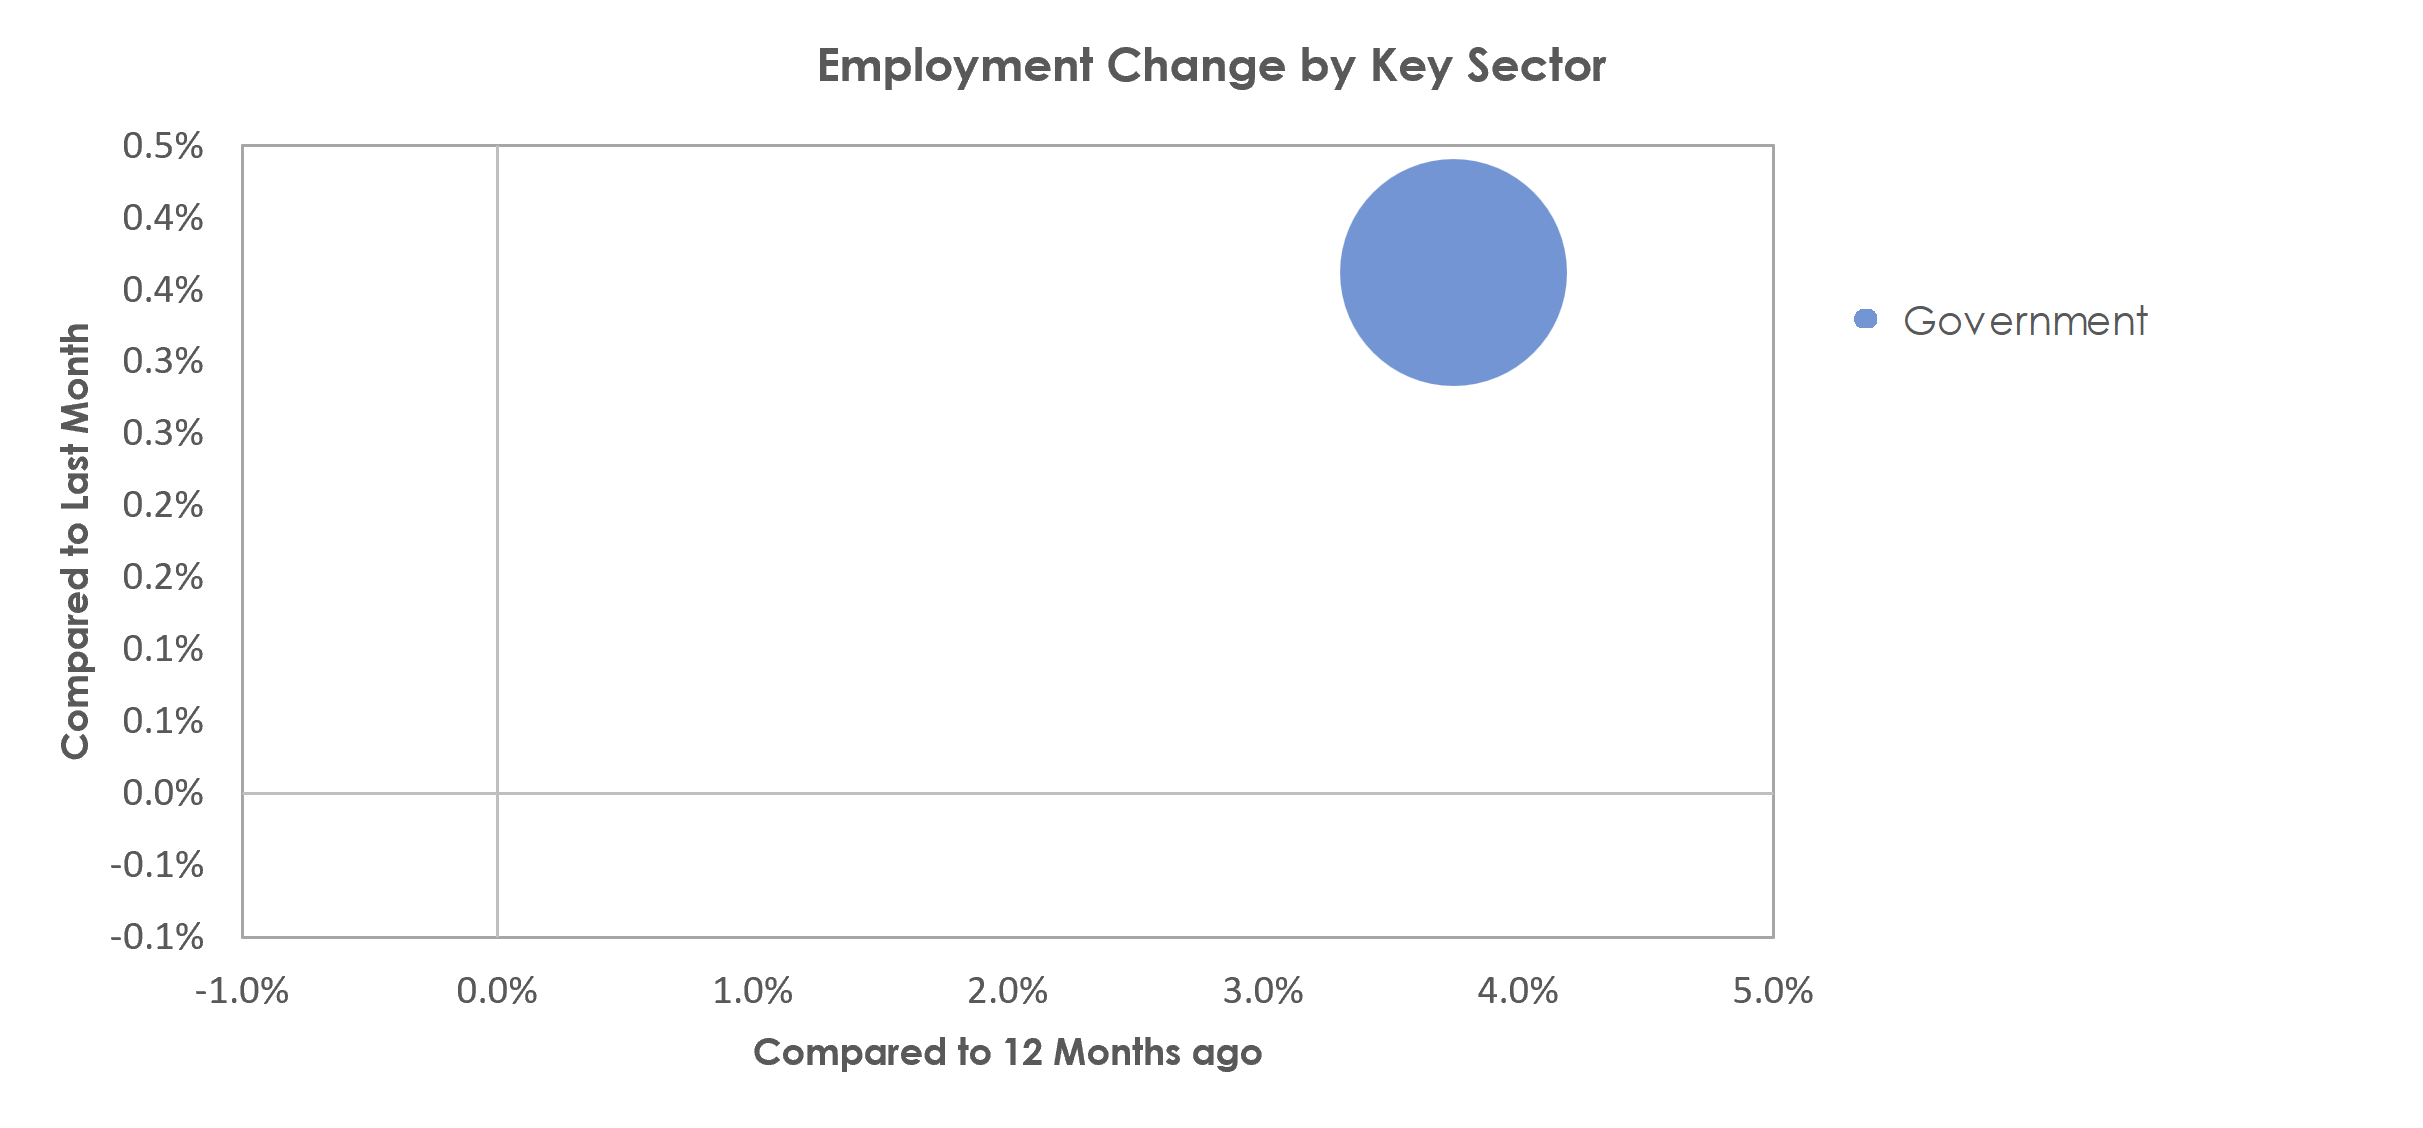 Blacksburg-Christiansburg-Radford, VA Unemployment by Industry October 2022